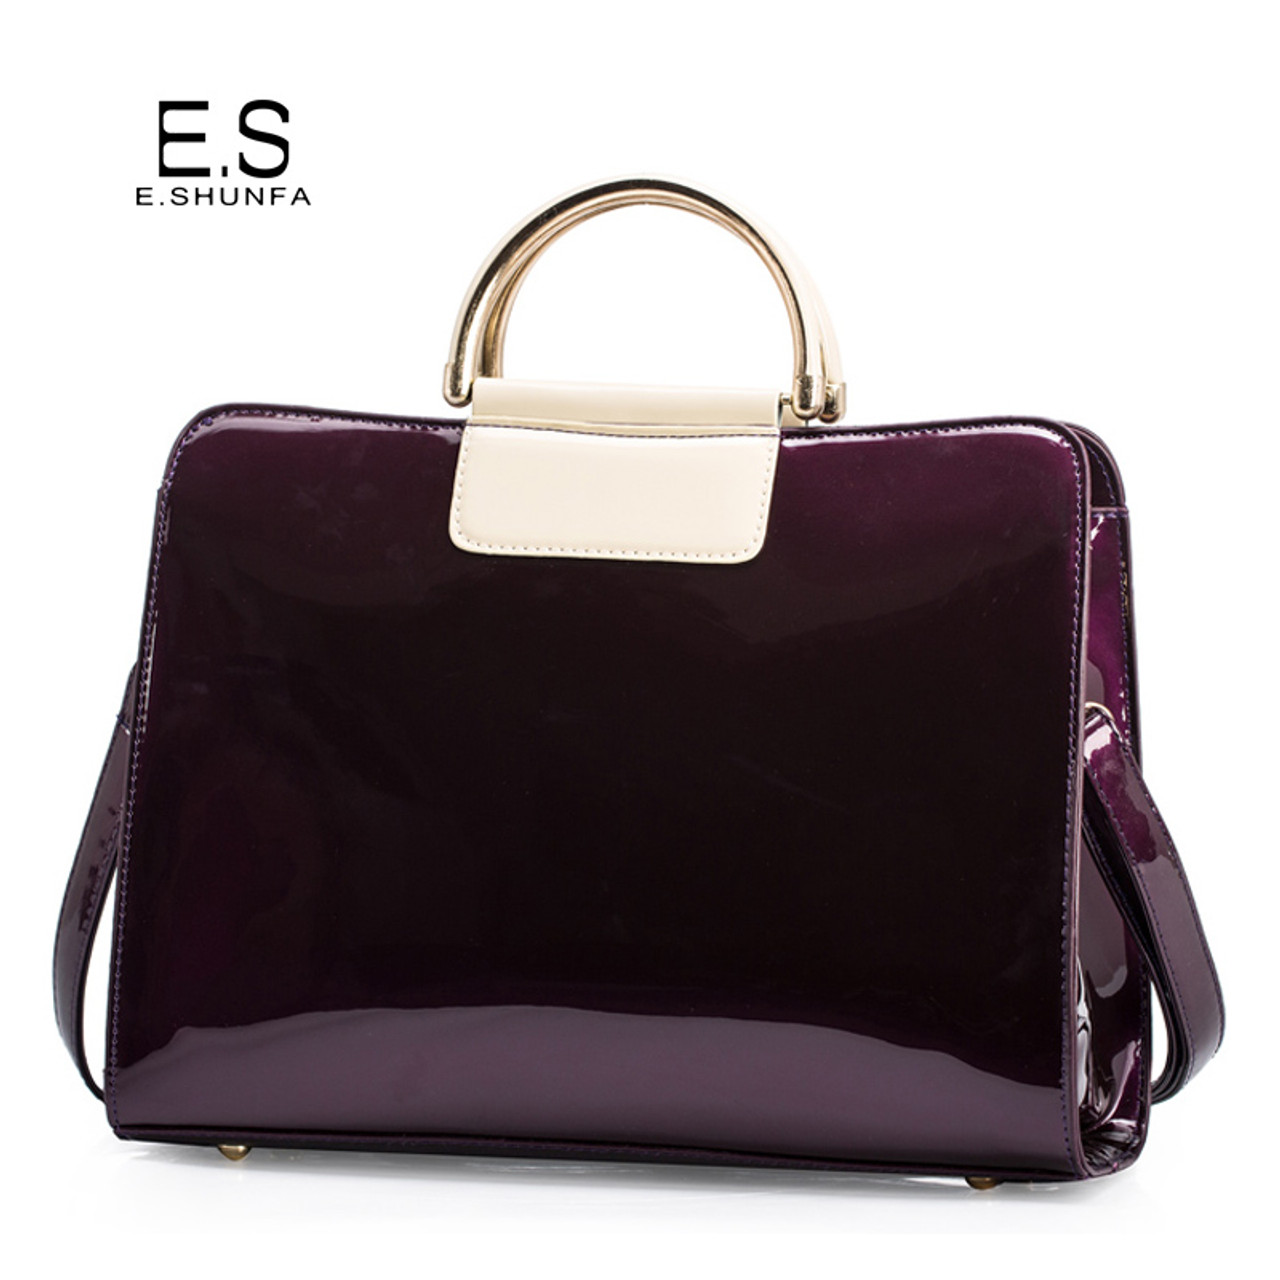 Patent-Leather-Shoulder-Bags-For-Women-2018-Elegant-Fashion-Handbag-Tote-Bag-Womens-High-Quality-Saffiano__63762.1546843044.jpg